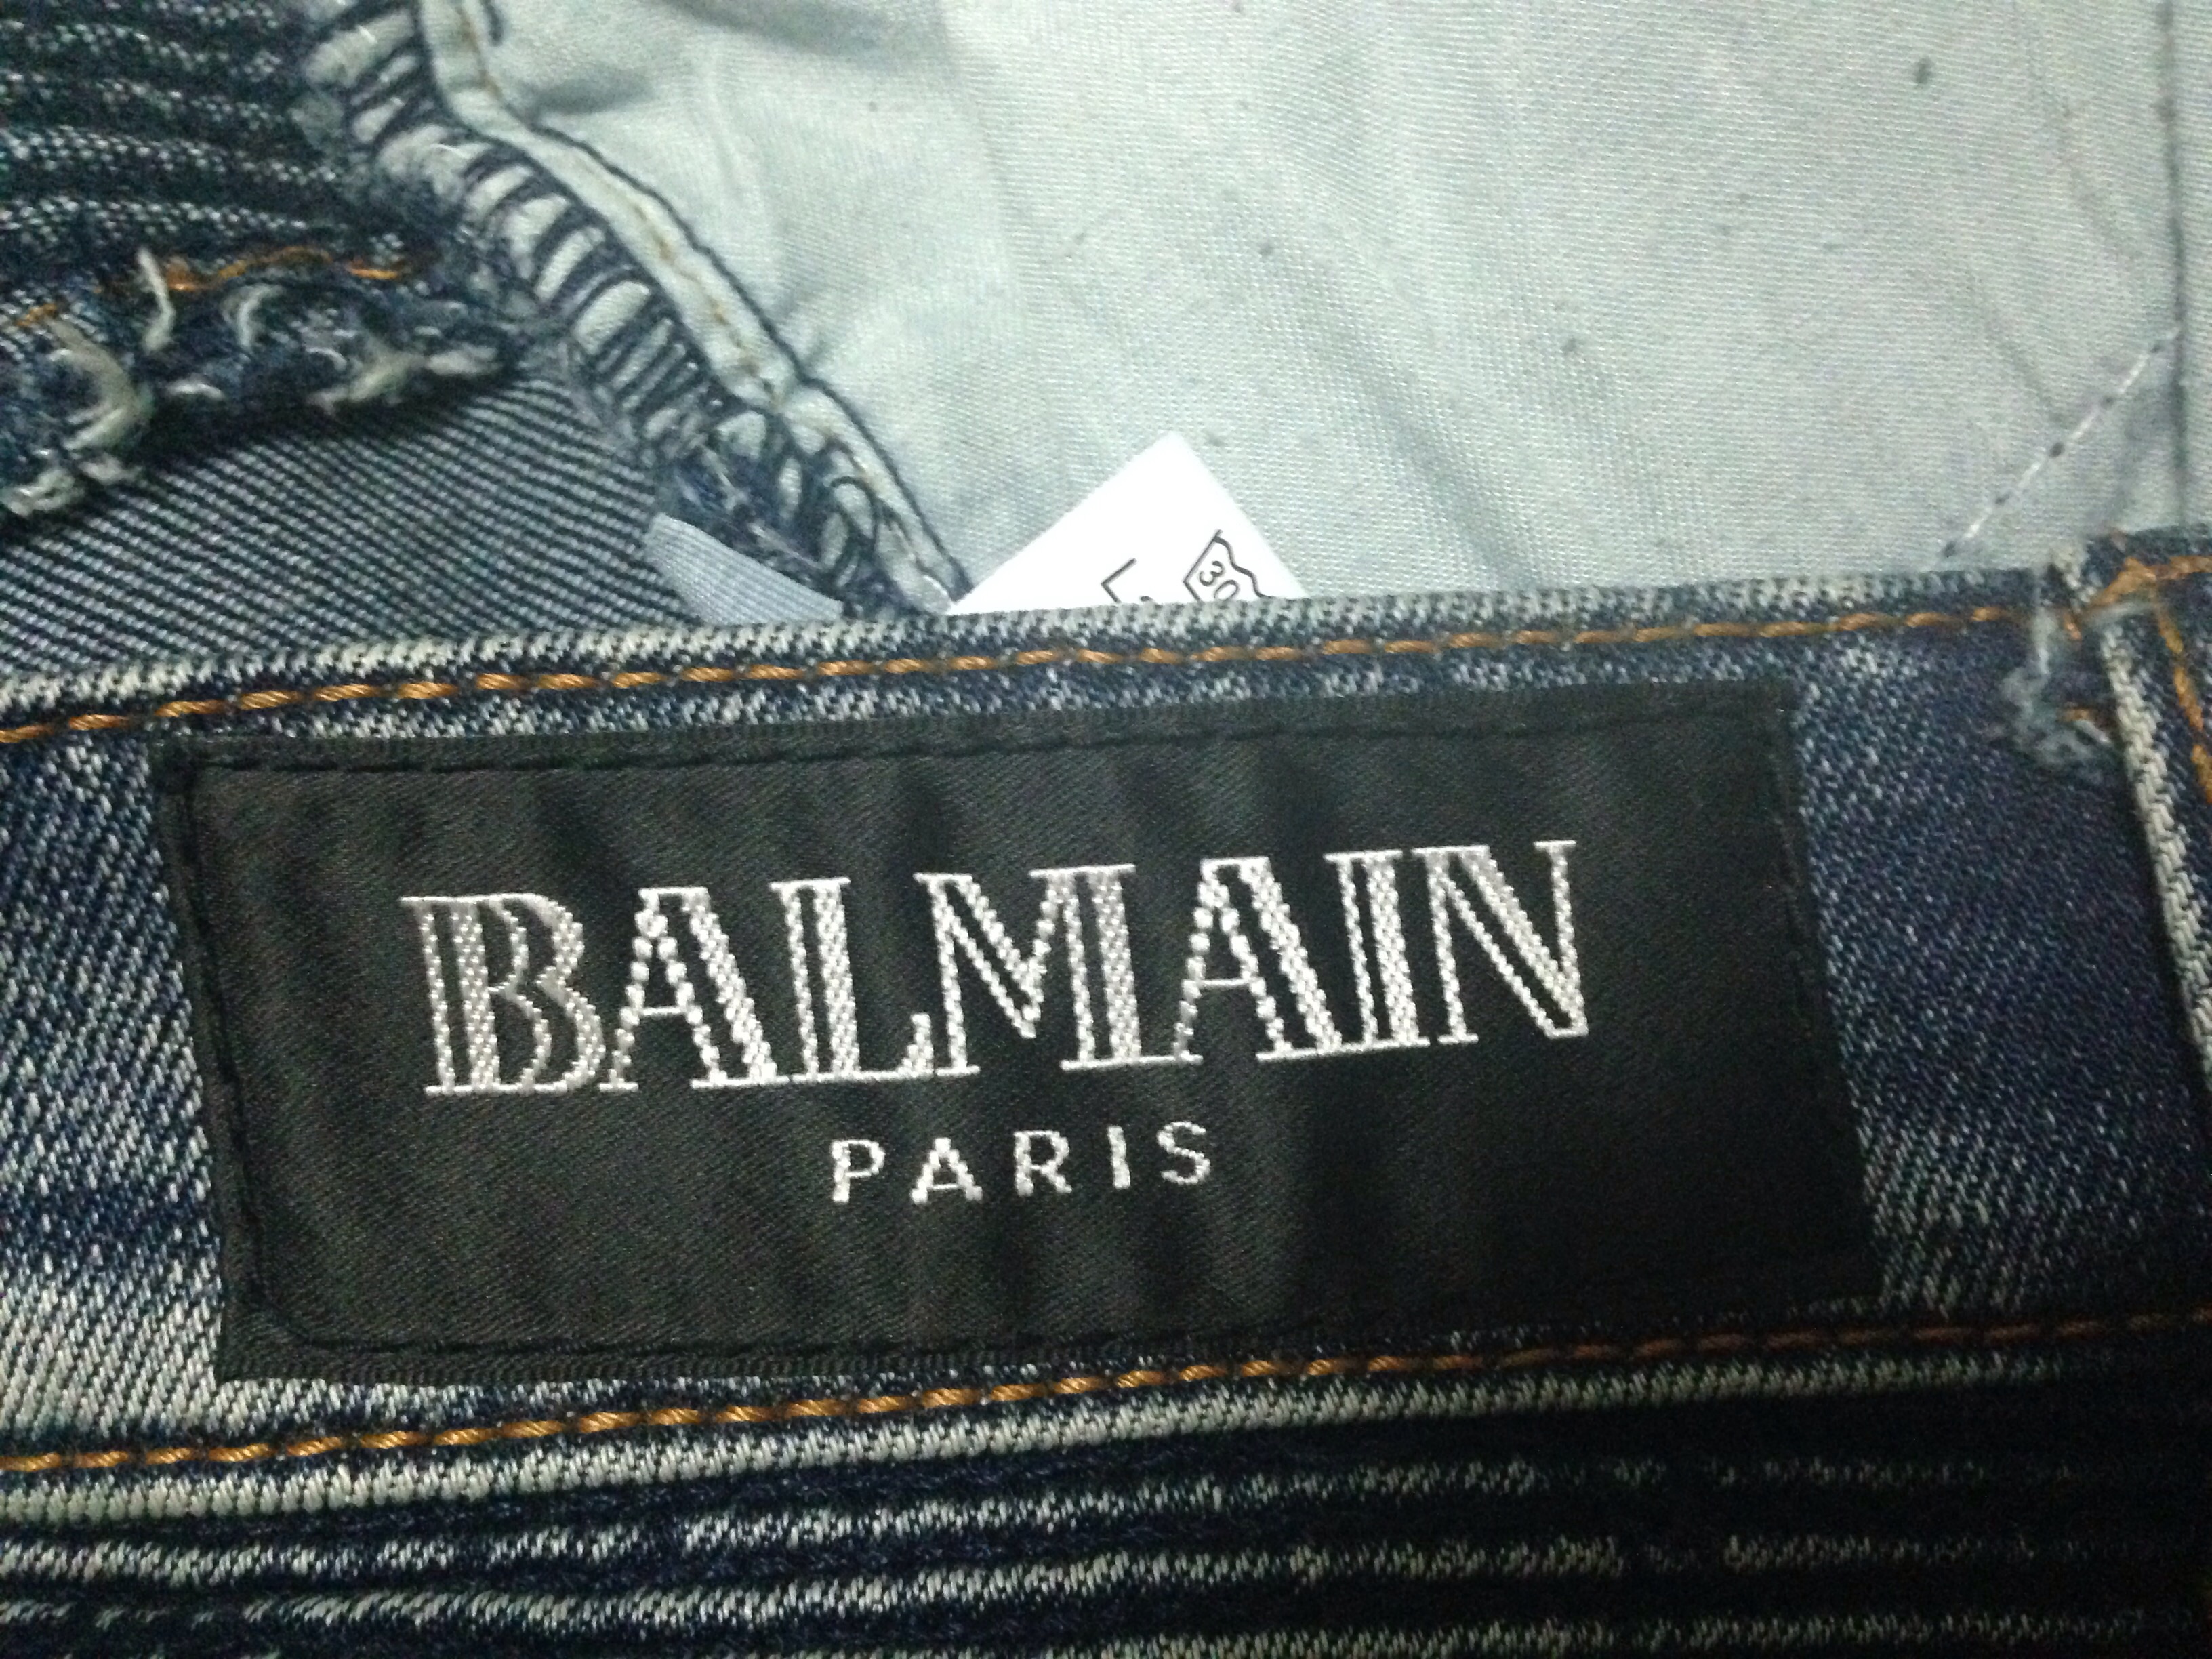 balmain biker jeans. is it fake or real? helpe please | Styleforum